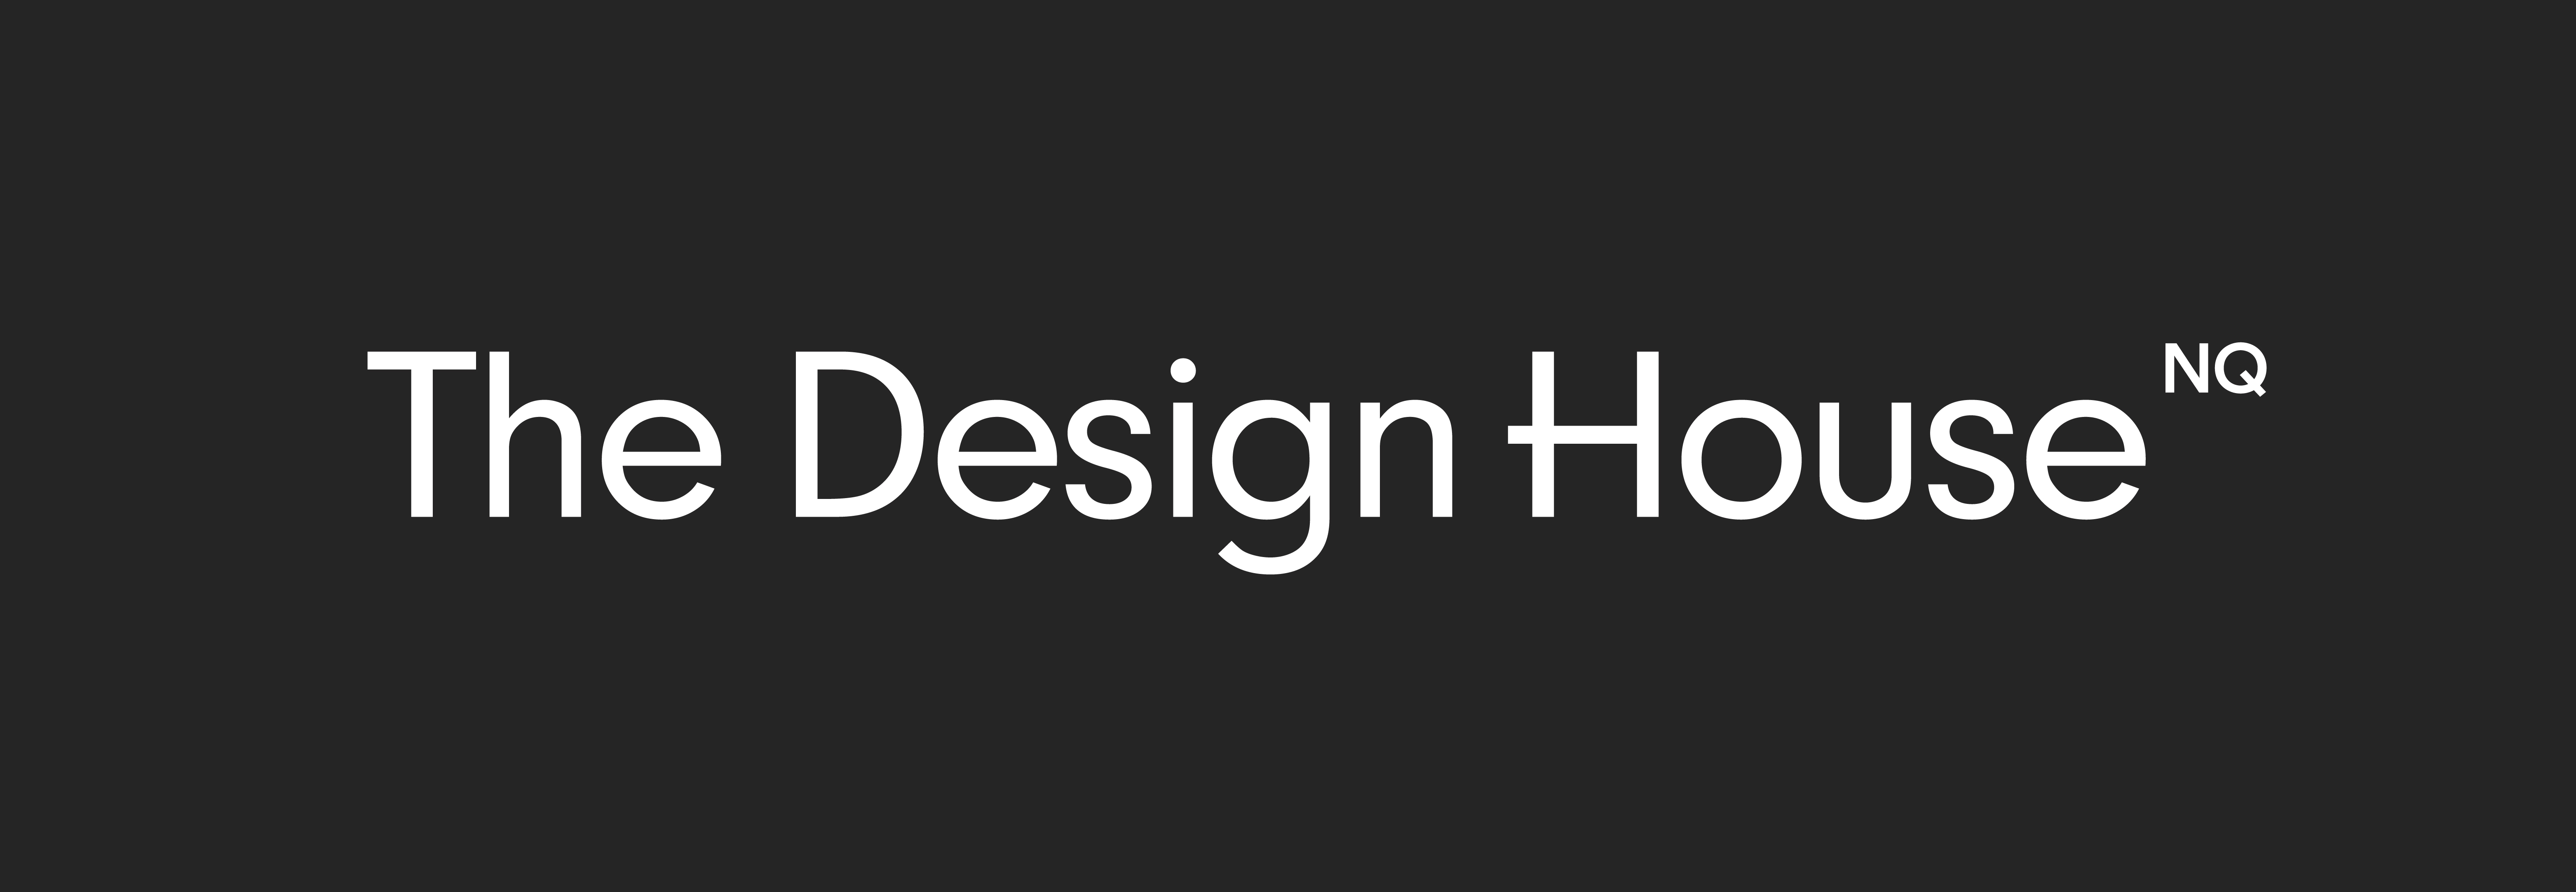 The Design House NQ Pty Ltd